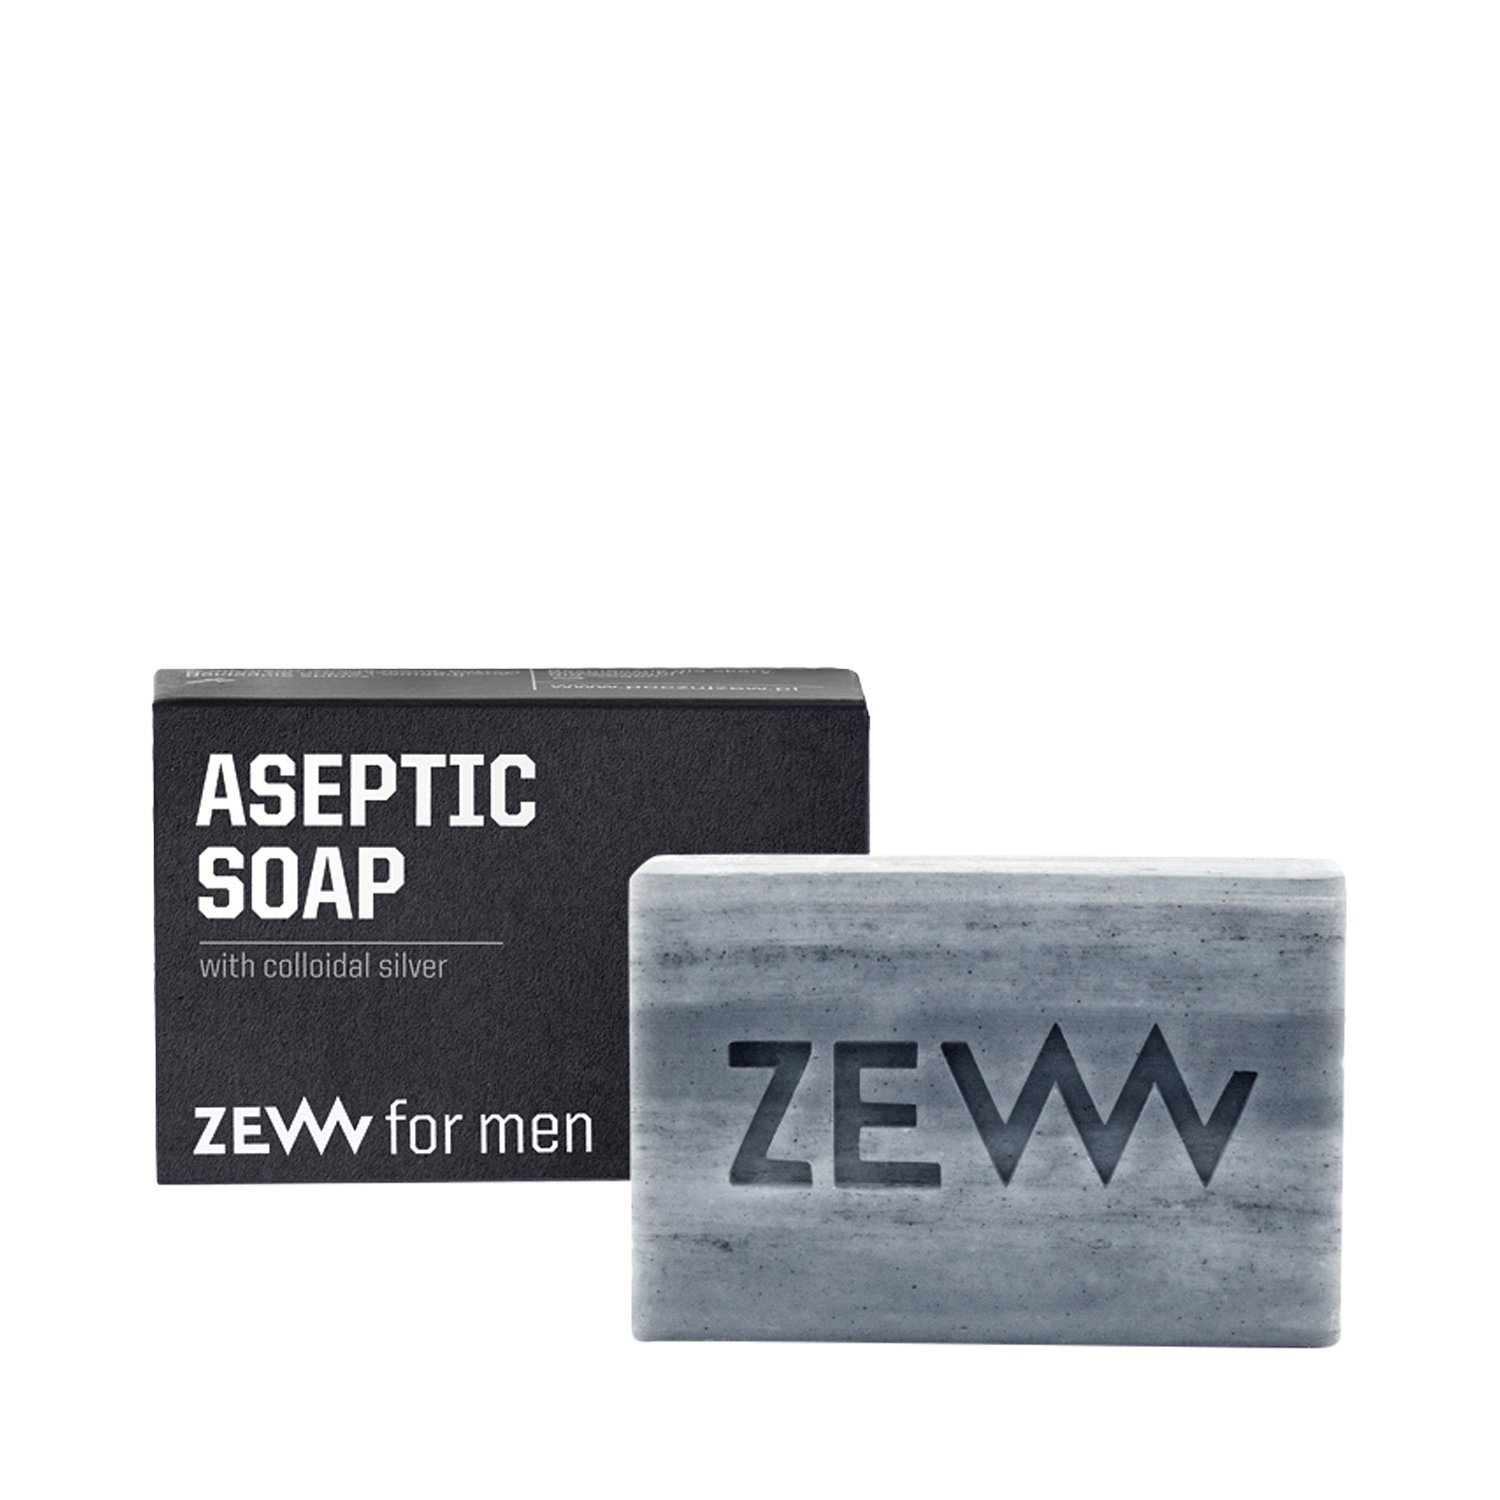 ZEW for men - Aspetic Soap - Seife mit Silber und Aktivkohle